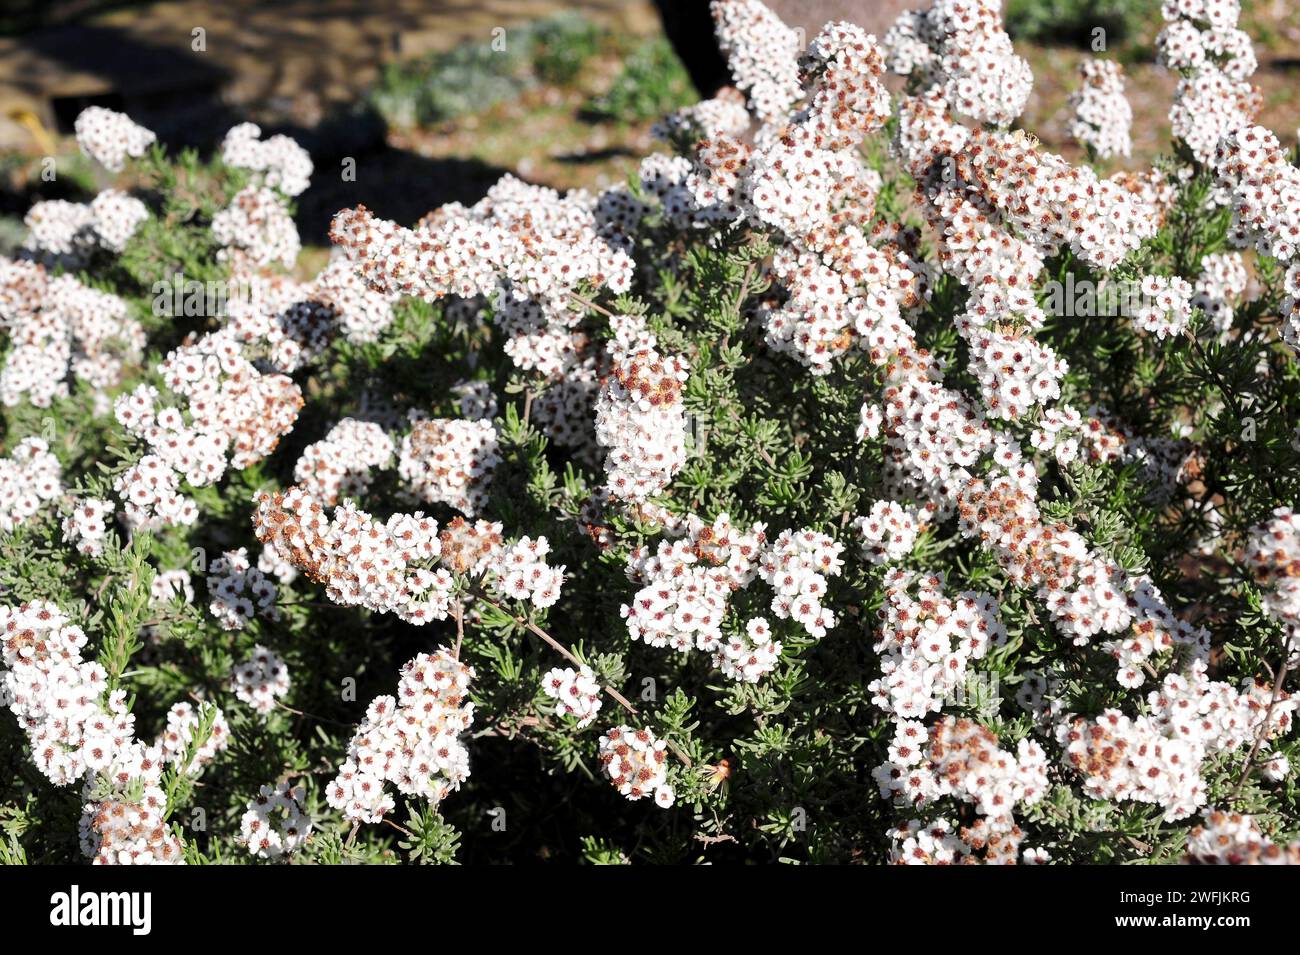 Wild rosemary (Eriocephalus africanus) is an evergreen shrub native to South Africa. Flowering plant. Stock Photo